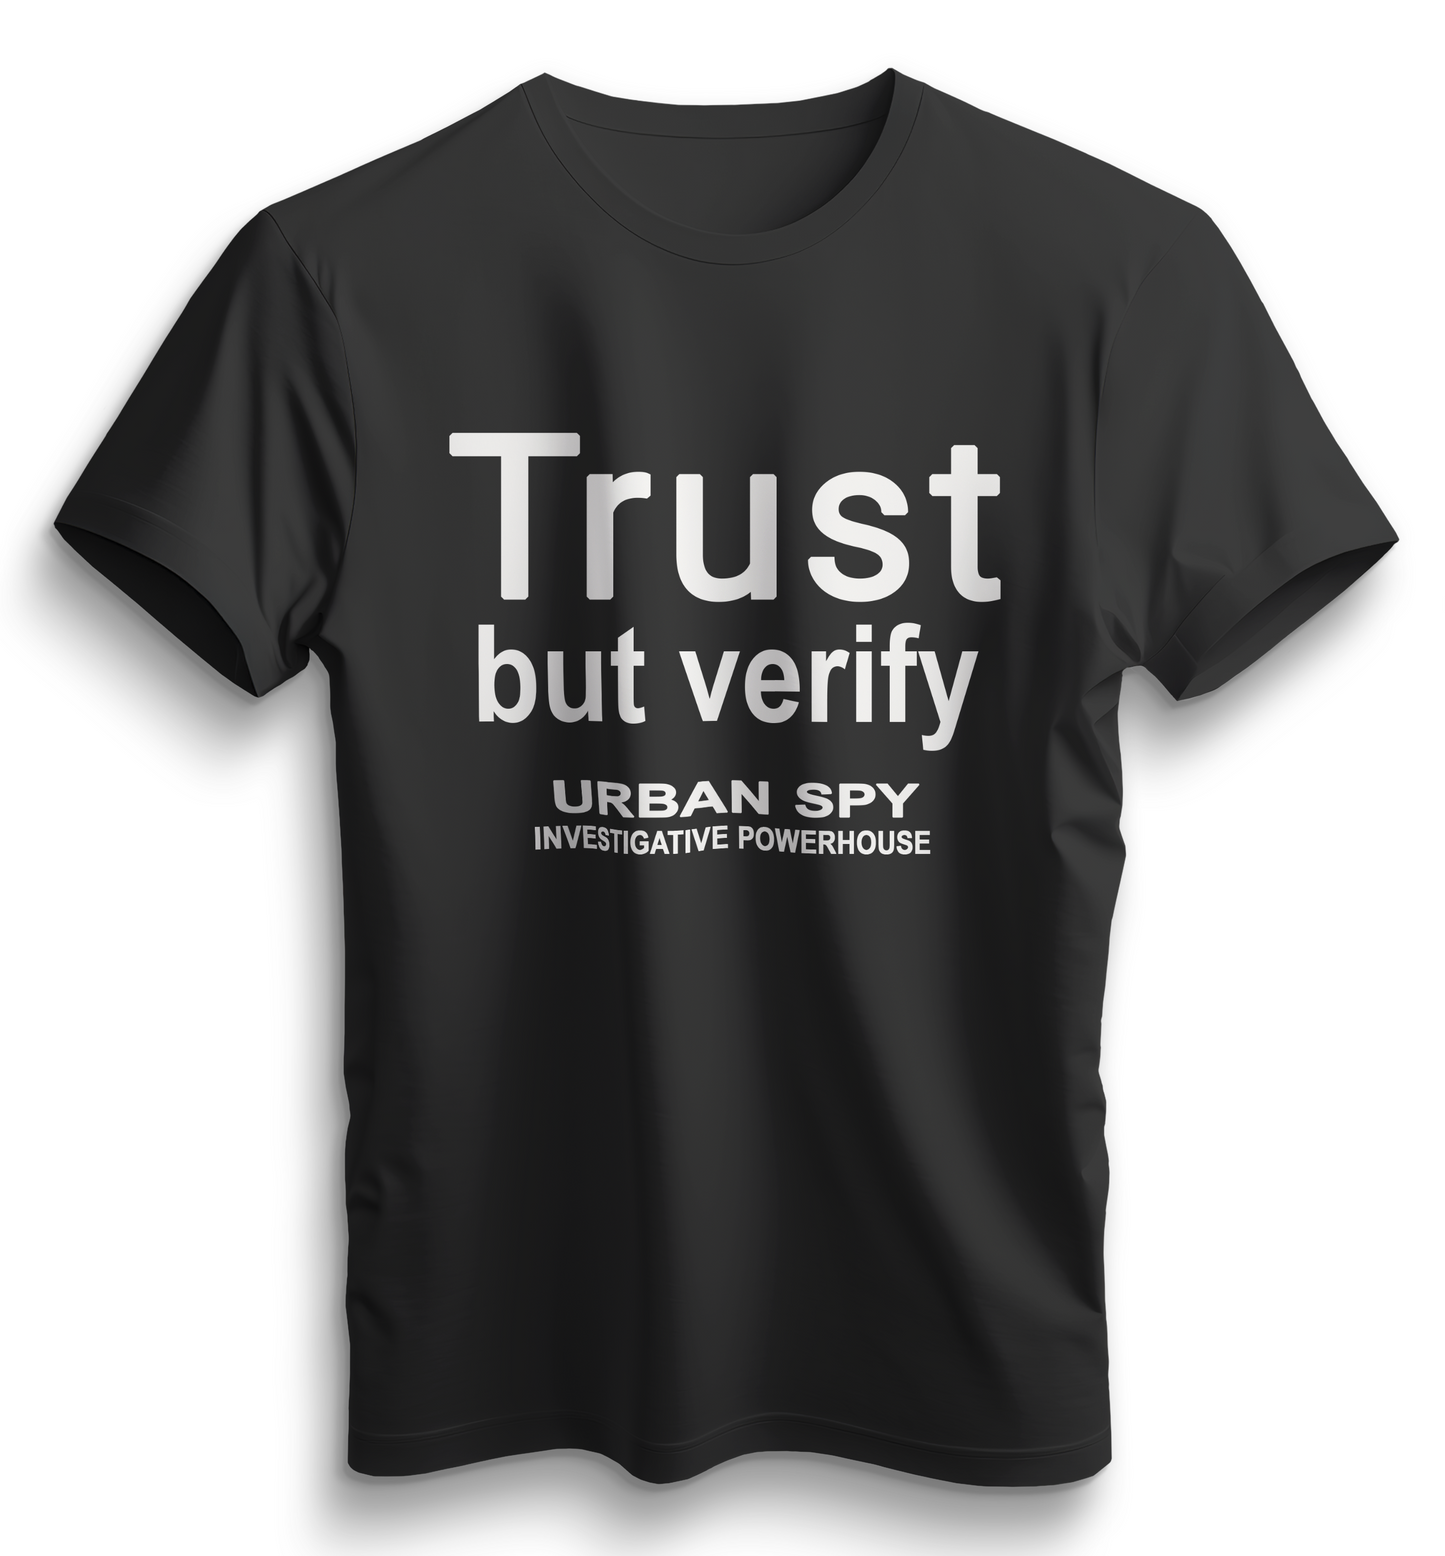 Urban Spy Shop "Trust But Verify" short sleeve T-Shirt